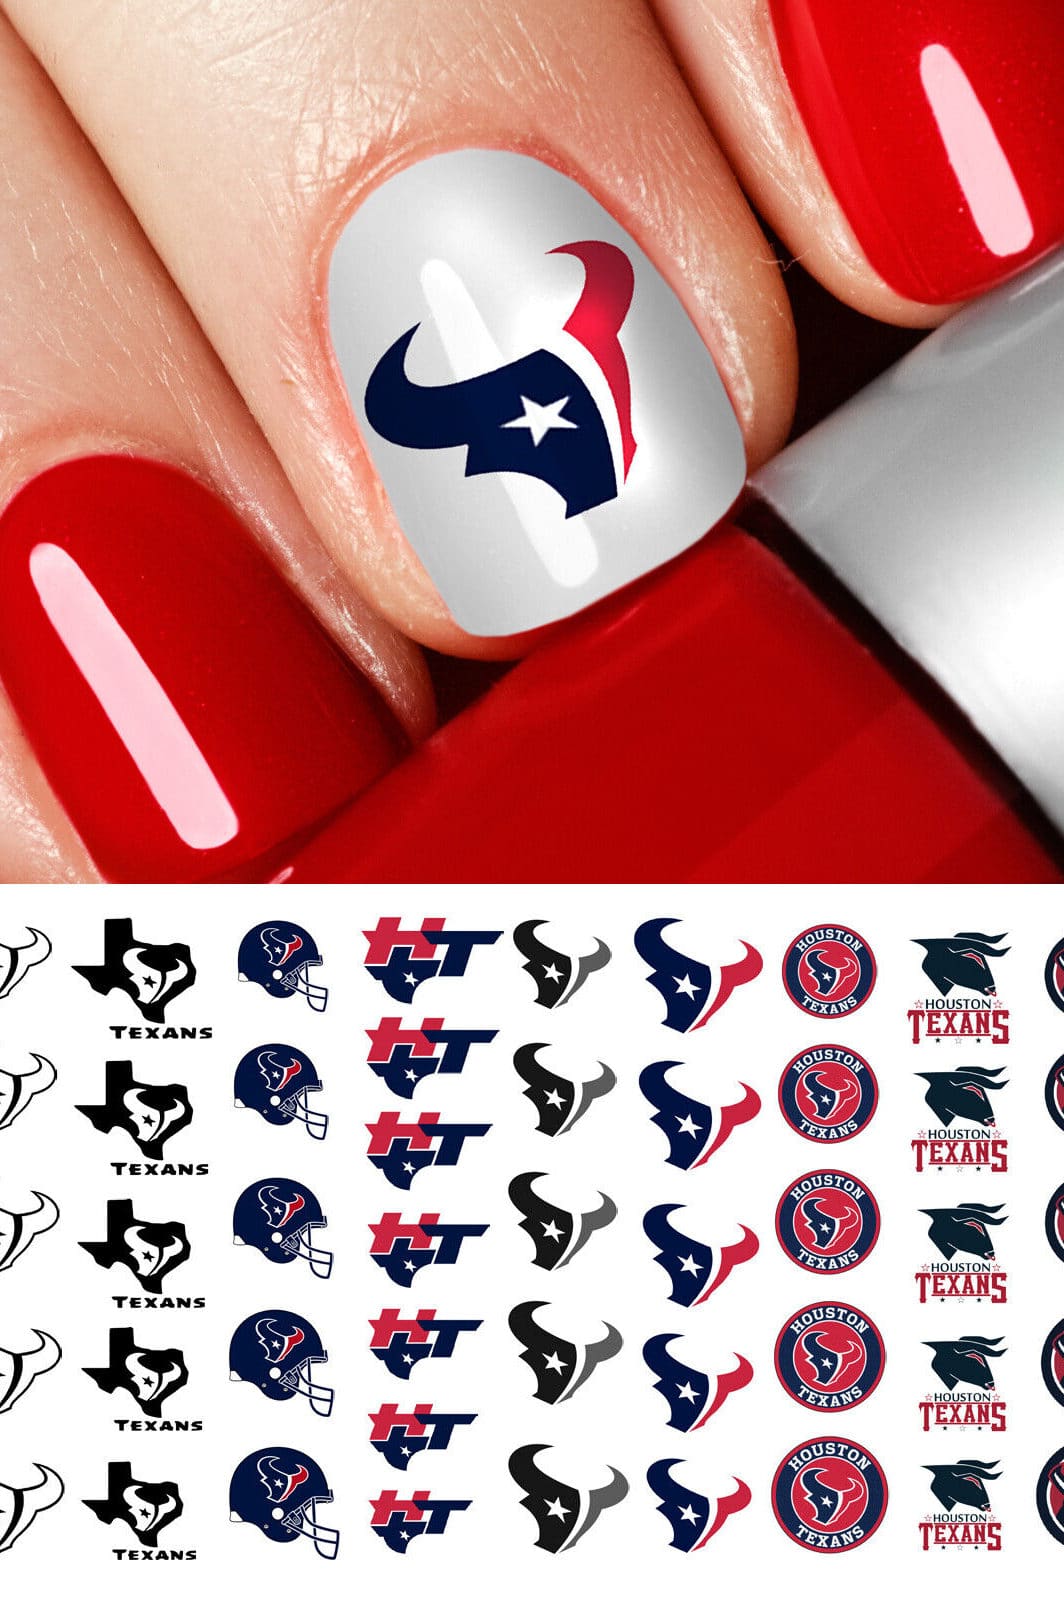 Houston Texans Football nail decals